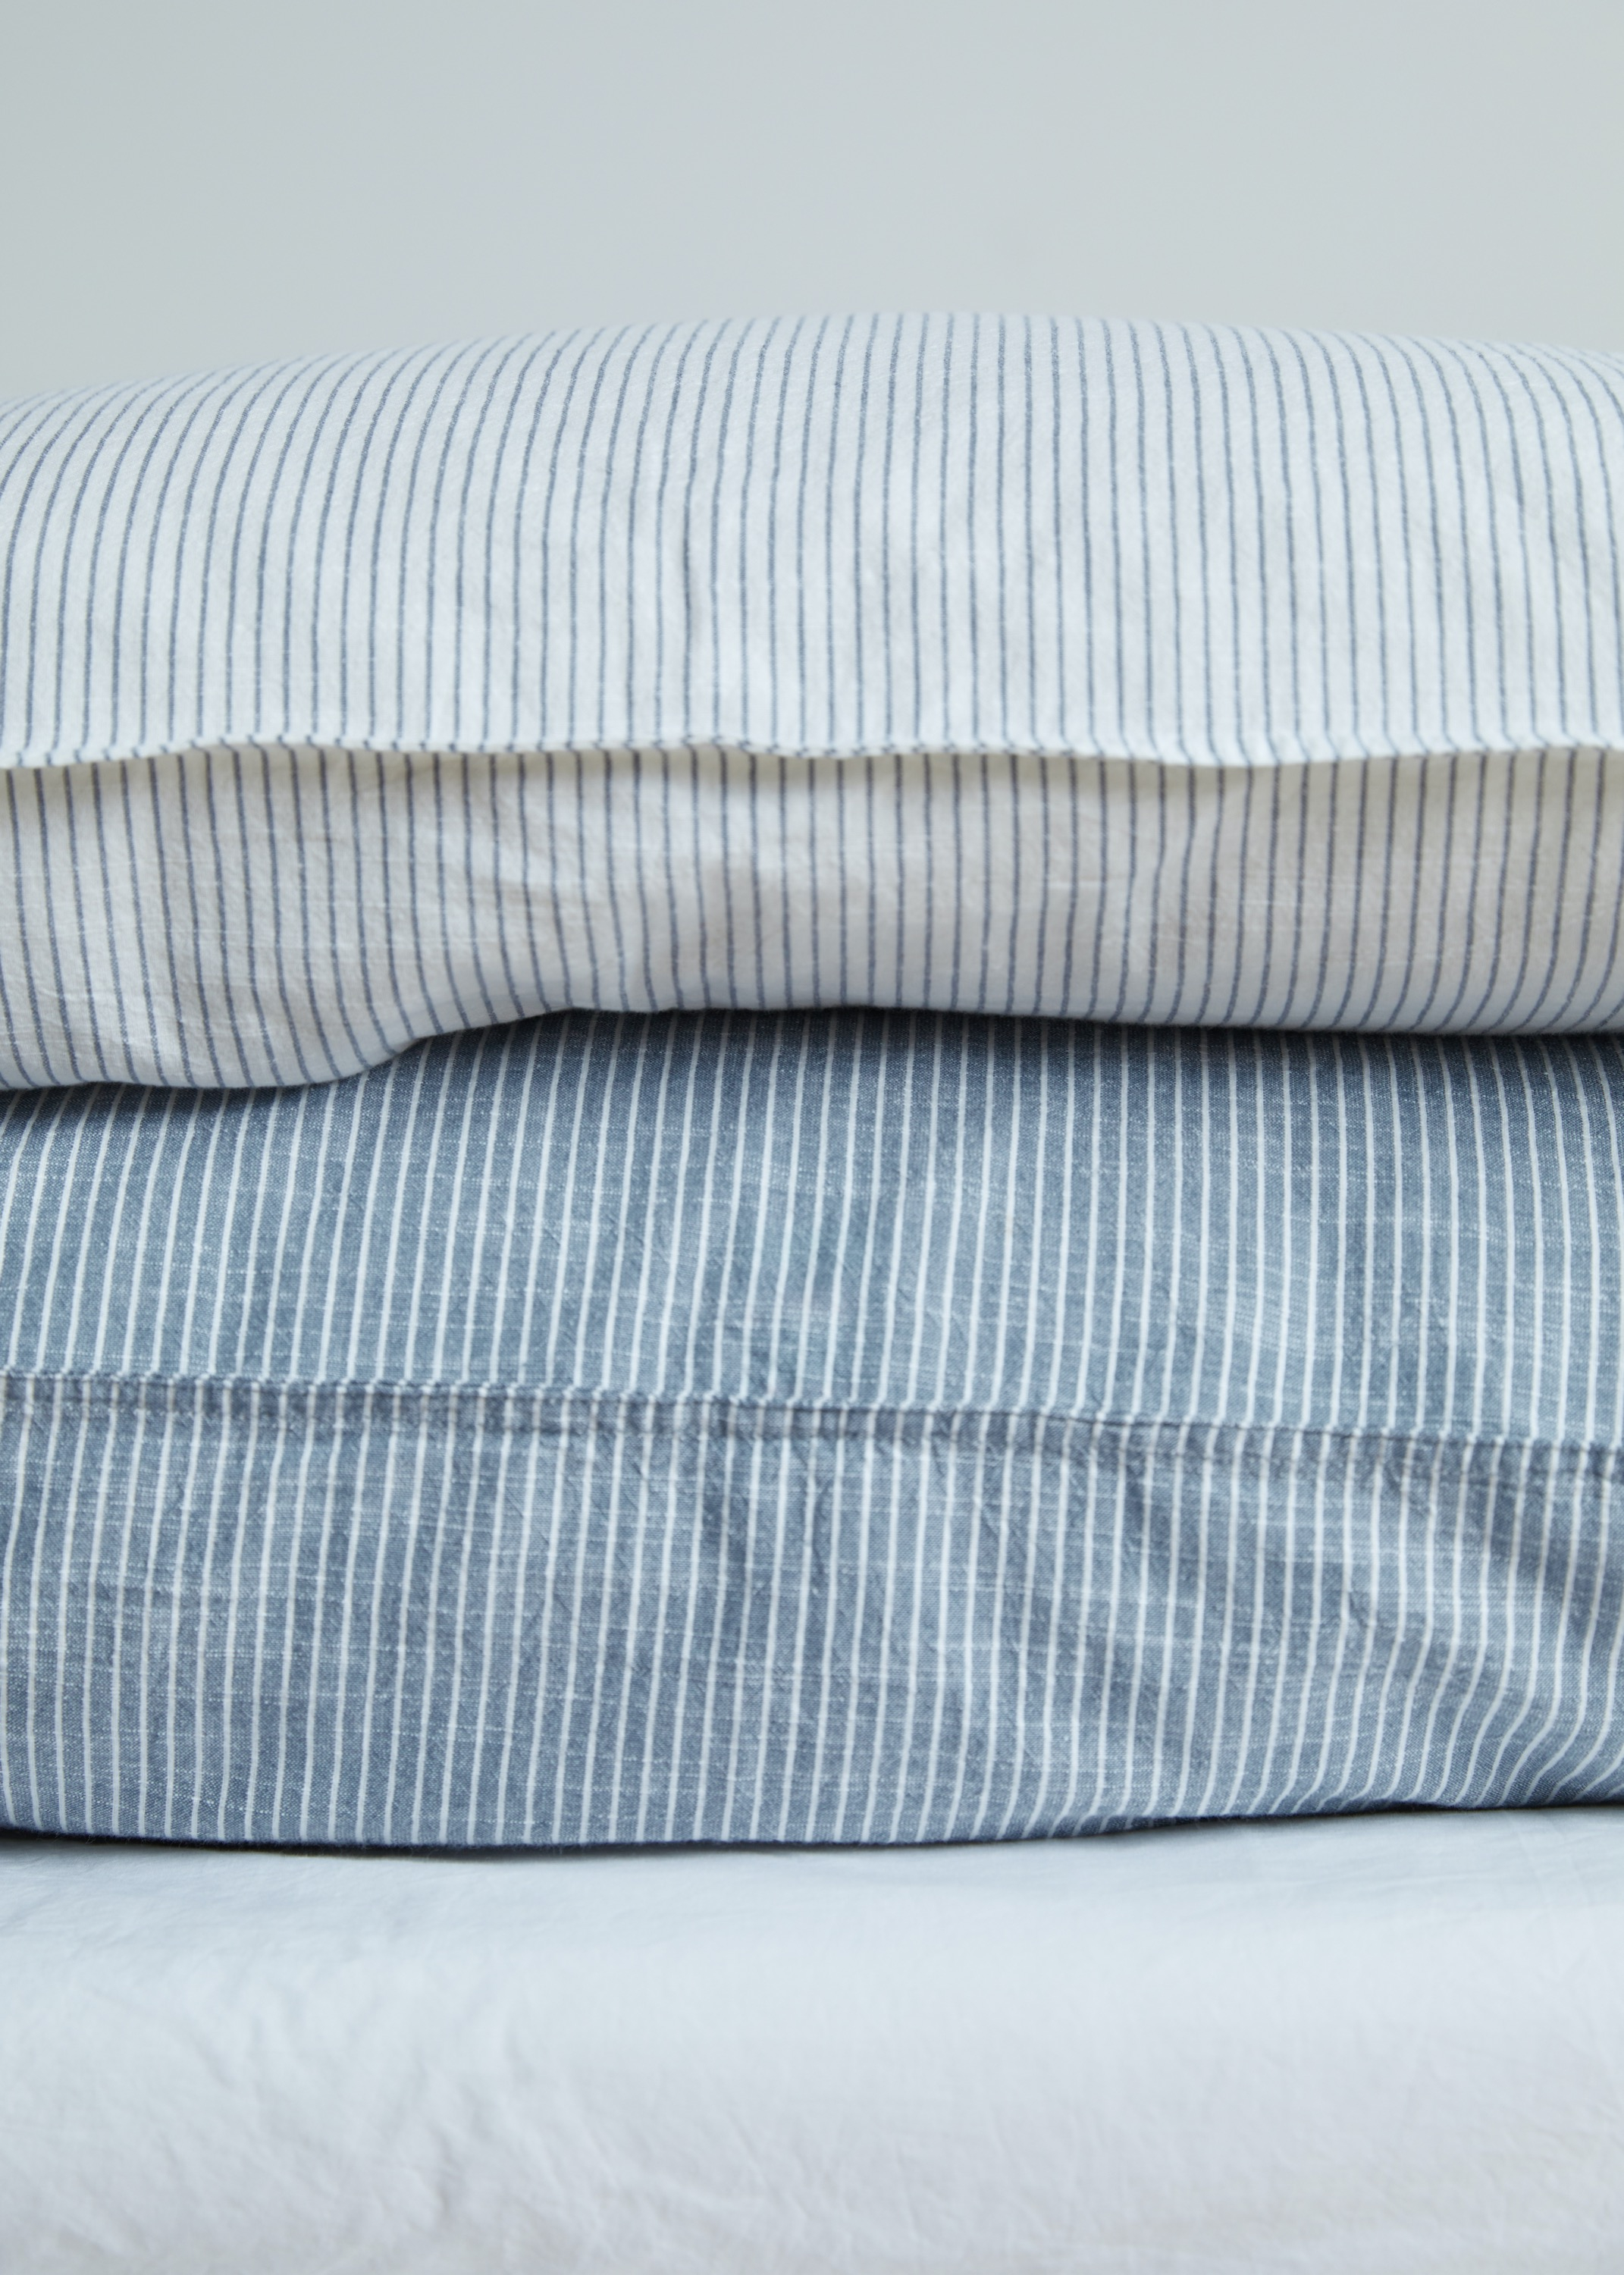 Bedlinen - Duvet Set Striped - Single (140x200 + pillow case) Thumbnail